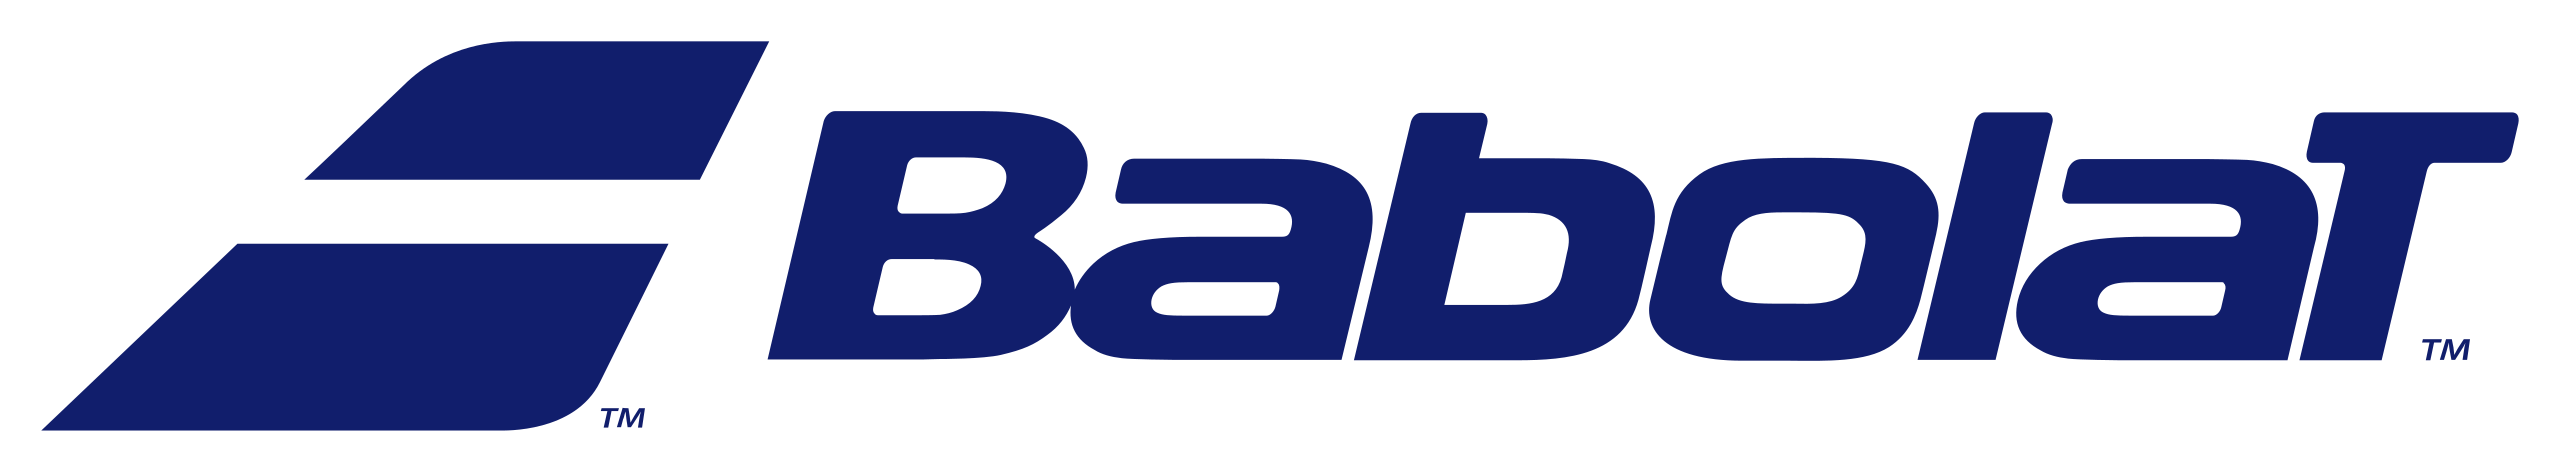 Babolat_logo.svg